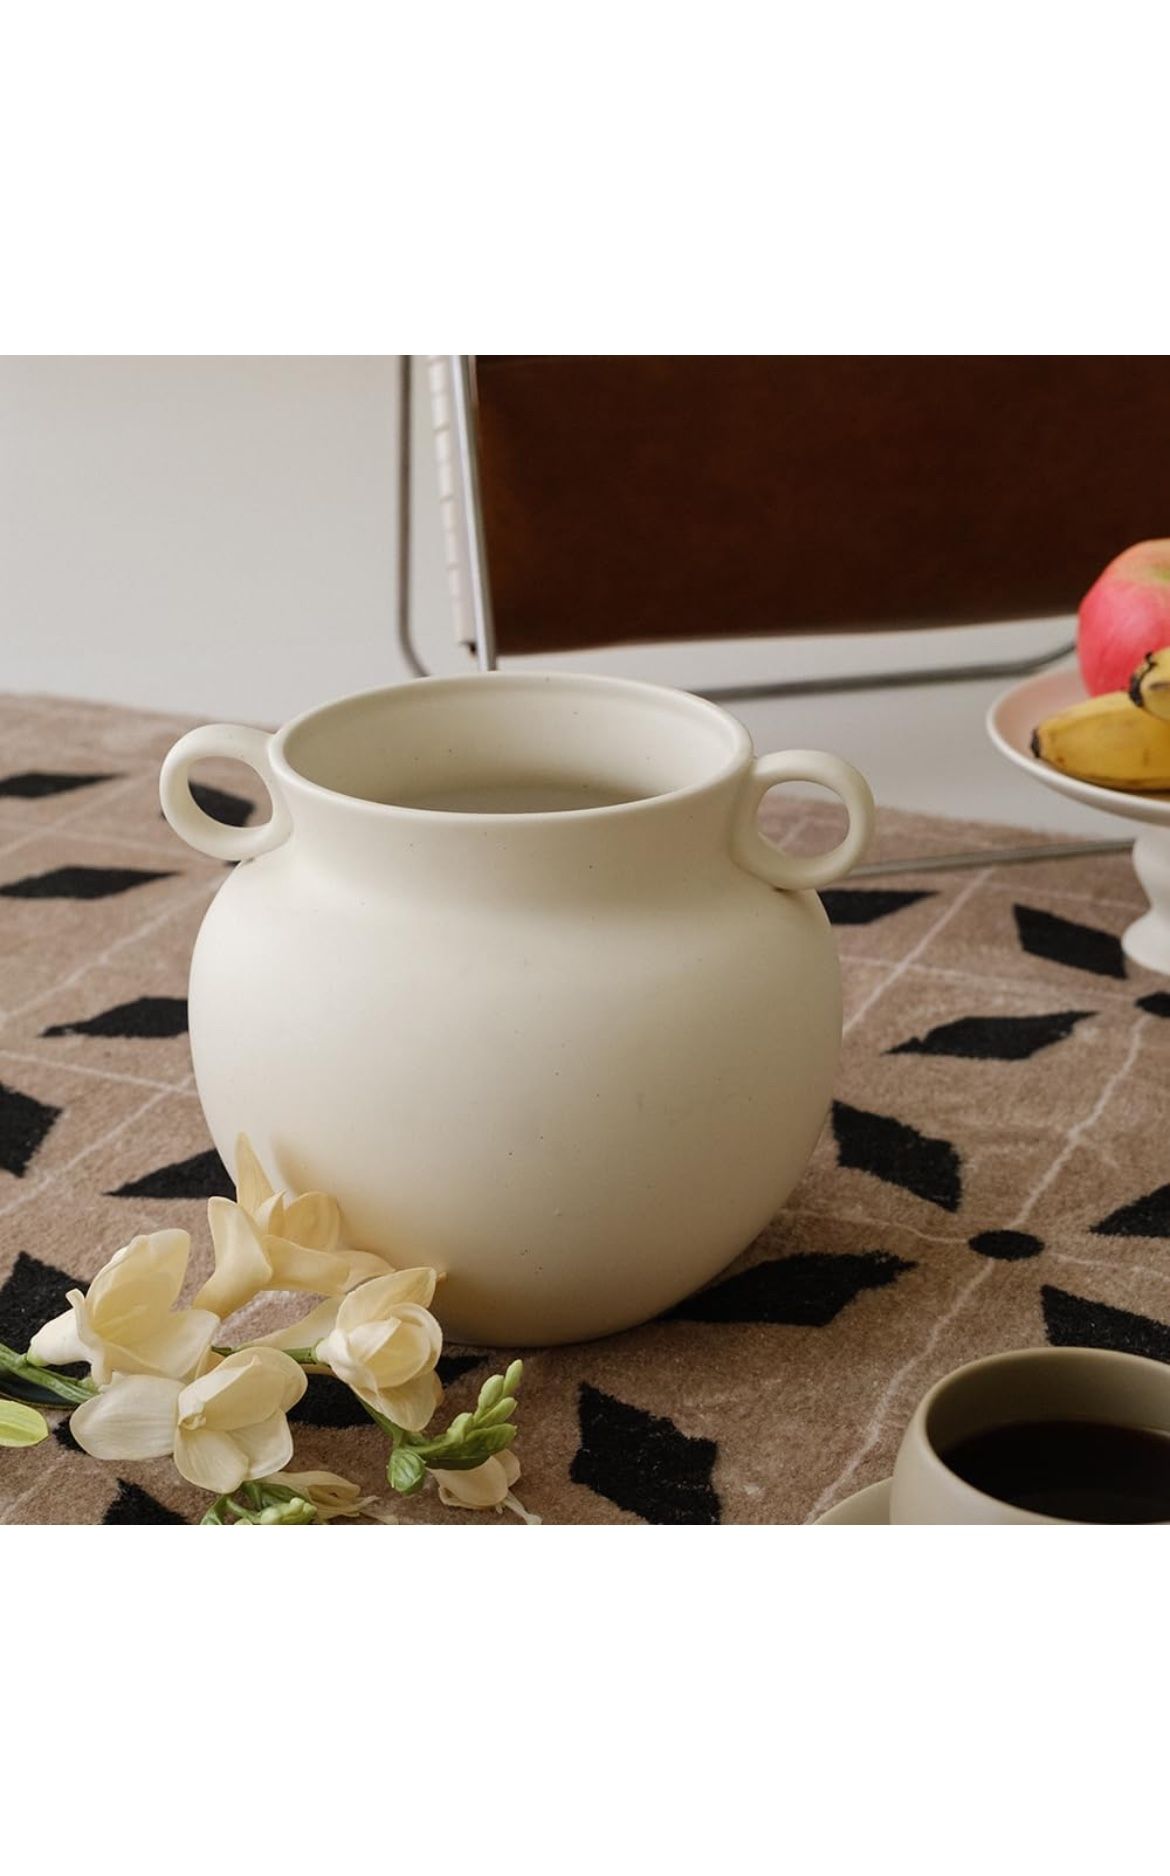 Round-Shape with Ear Wide Mouth Vase, Honey Pot-Shaped Decorative Plant Pot, No Drainage Hole